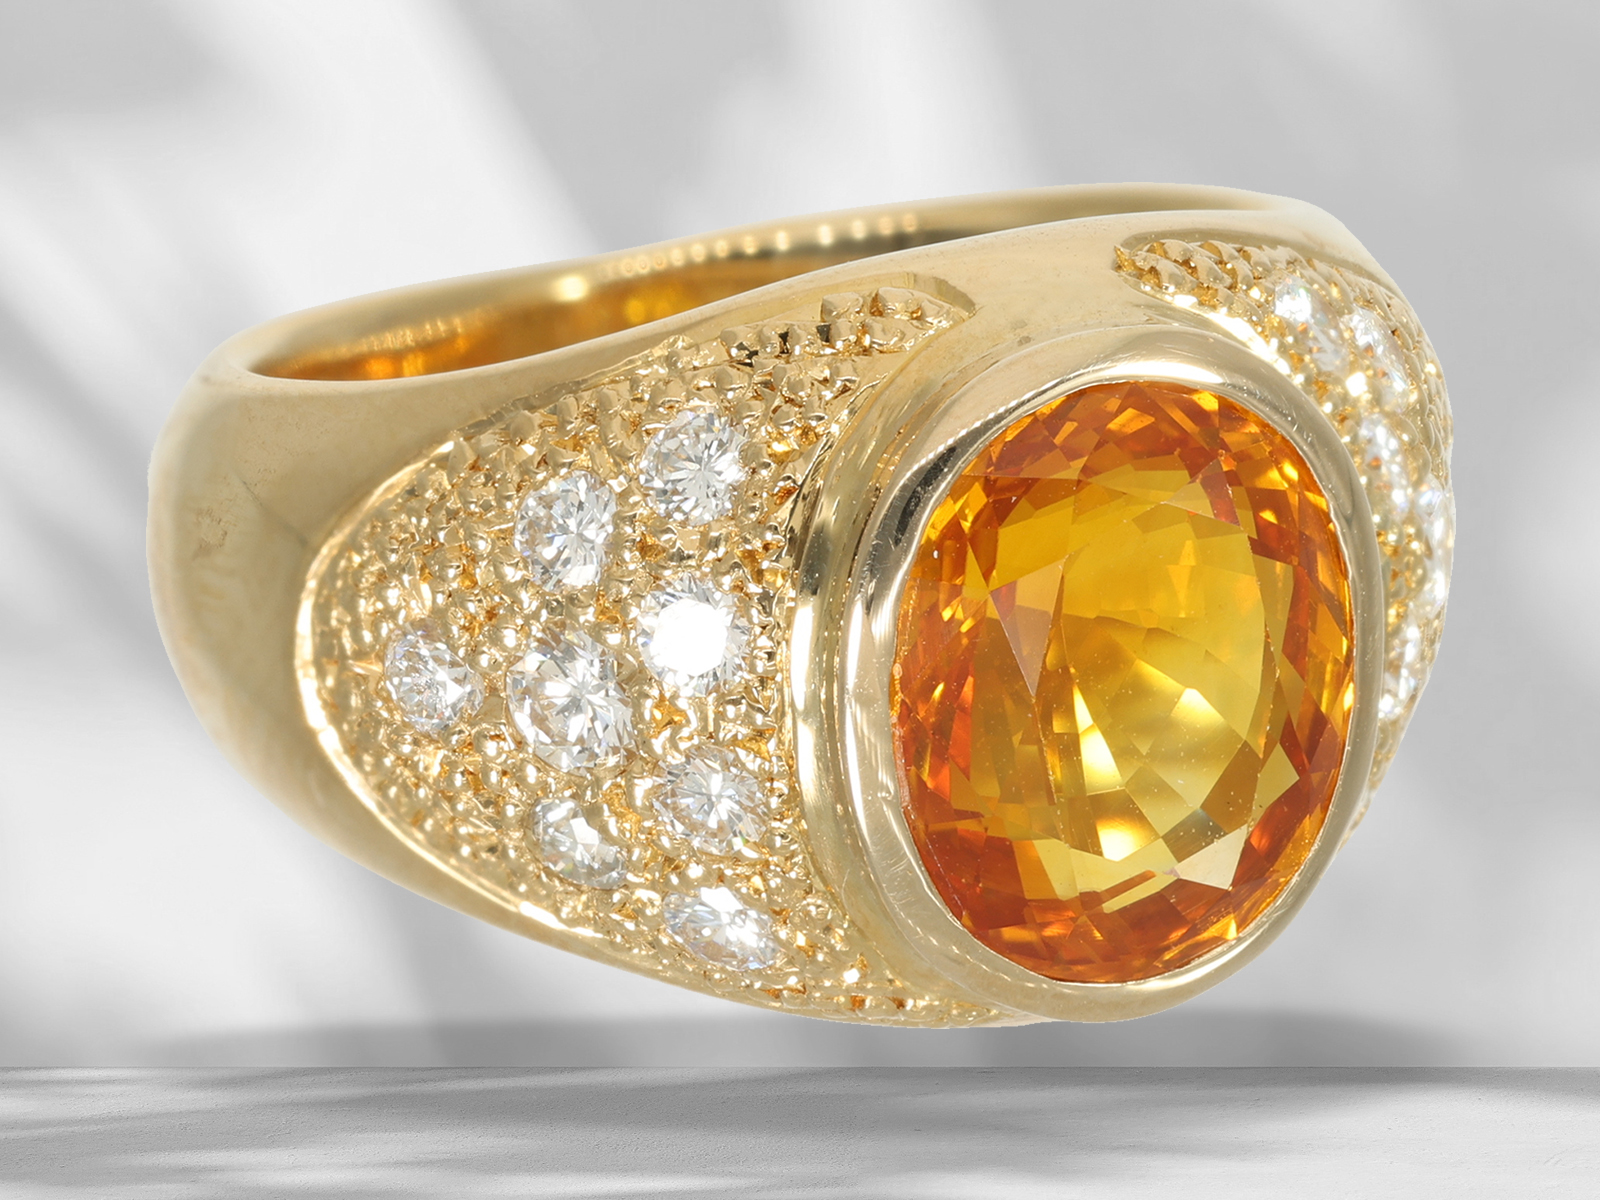 Ring: goldsmith ring with rare, intense orange sapphire (Ceylon Ratnapura), 4.5ct - Image 3 of 5